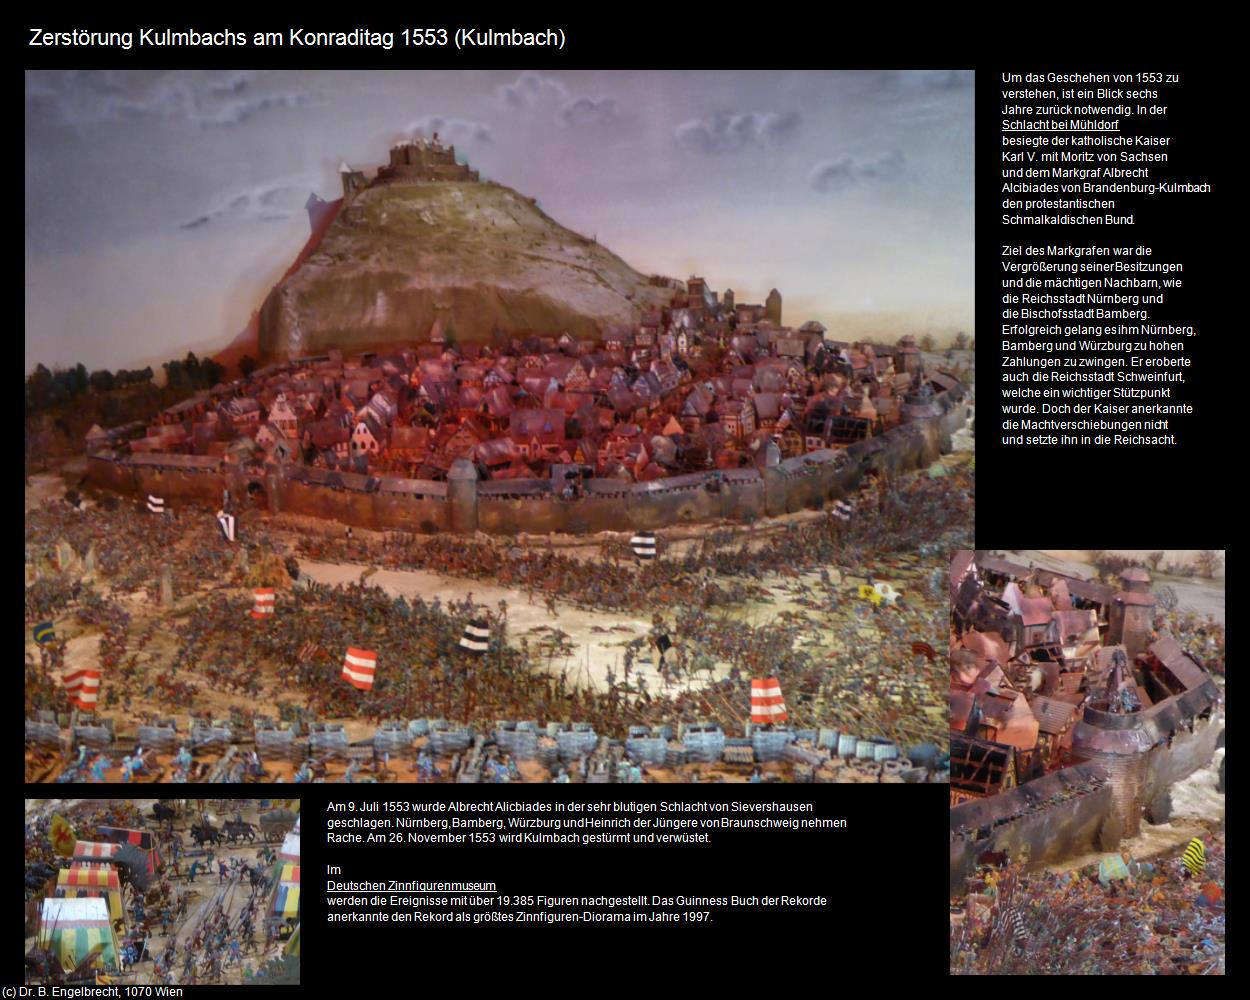 Zerstörung Kulmbachs am Konraditage 1553  (Kulmbach) in Kulturatlas-BAYERN(c)B.Engelbrecht